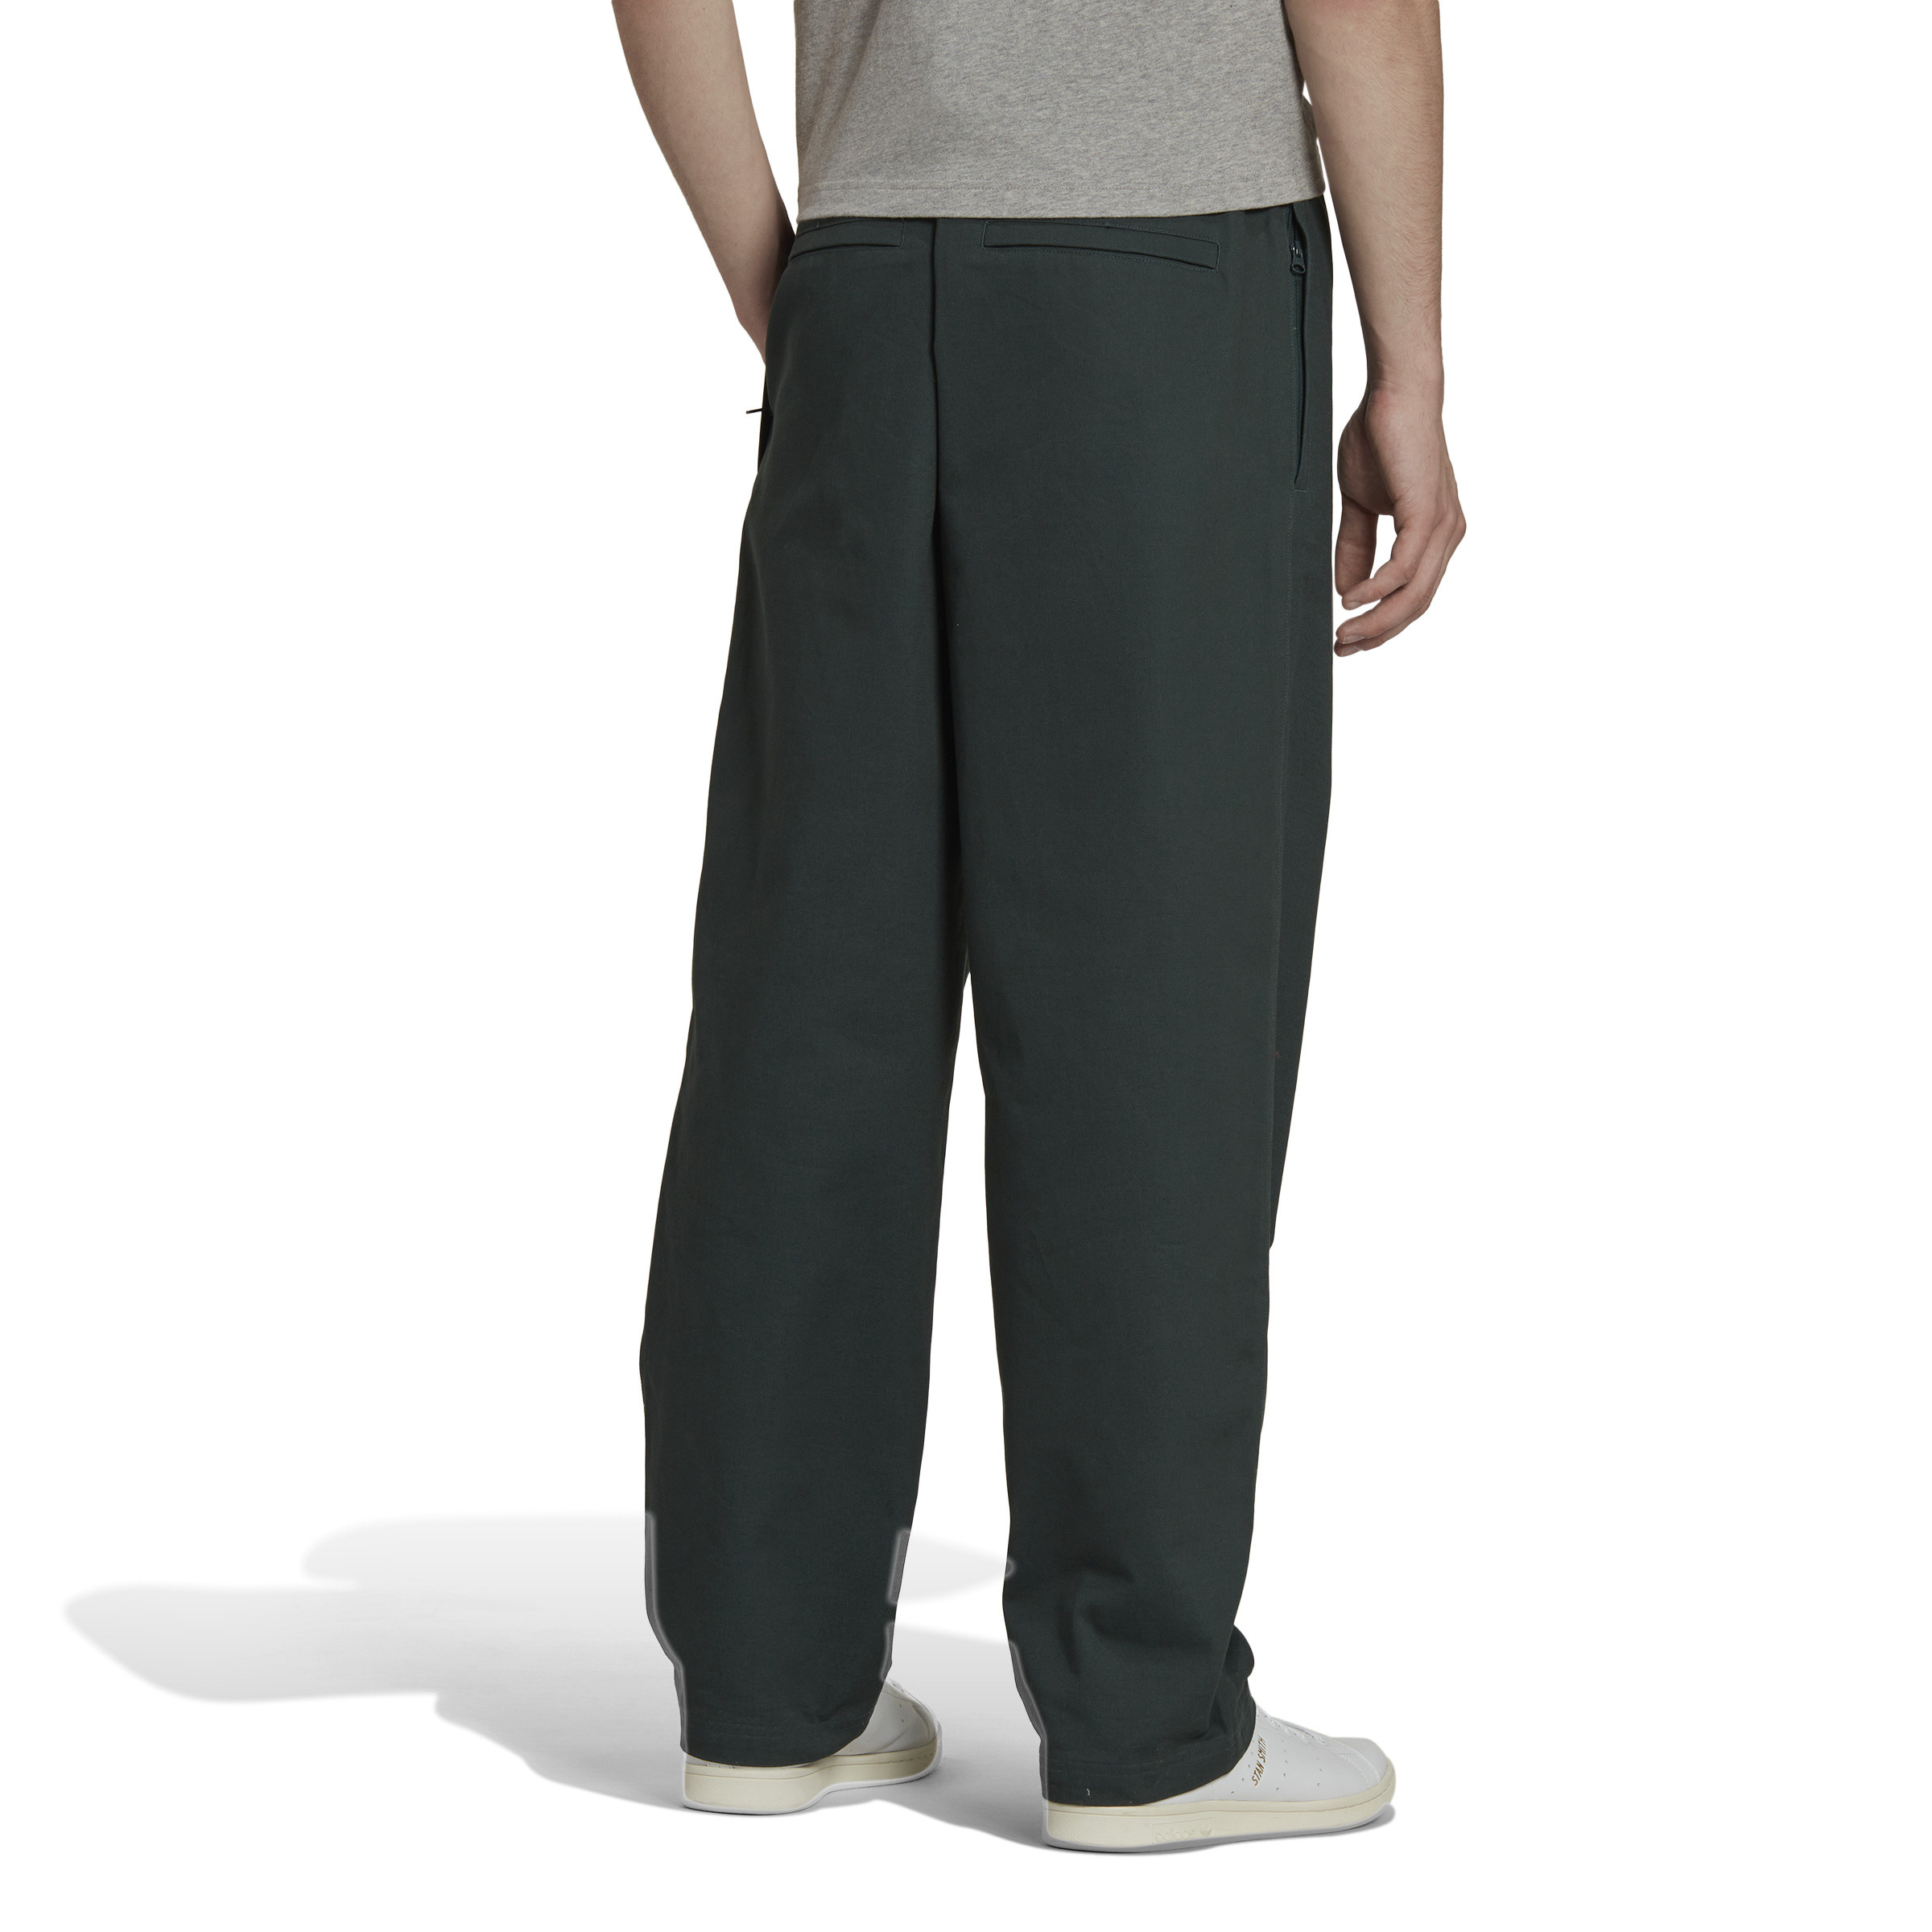 Adidas - Pantaloni adicolor chino, Verde scuro, large image number 3